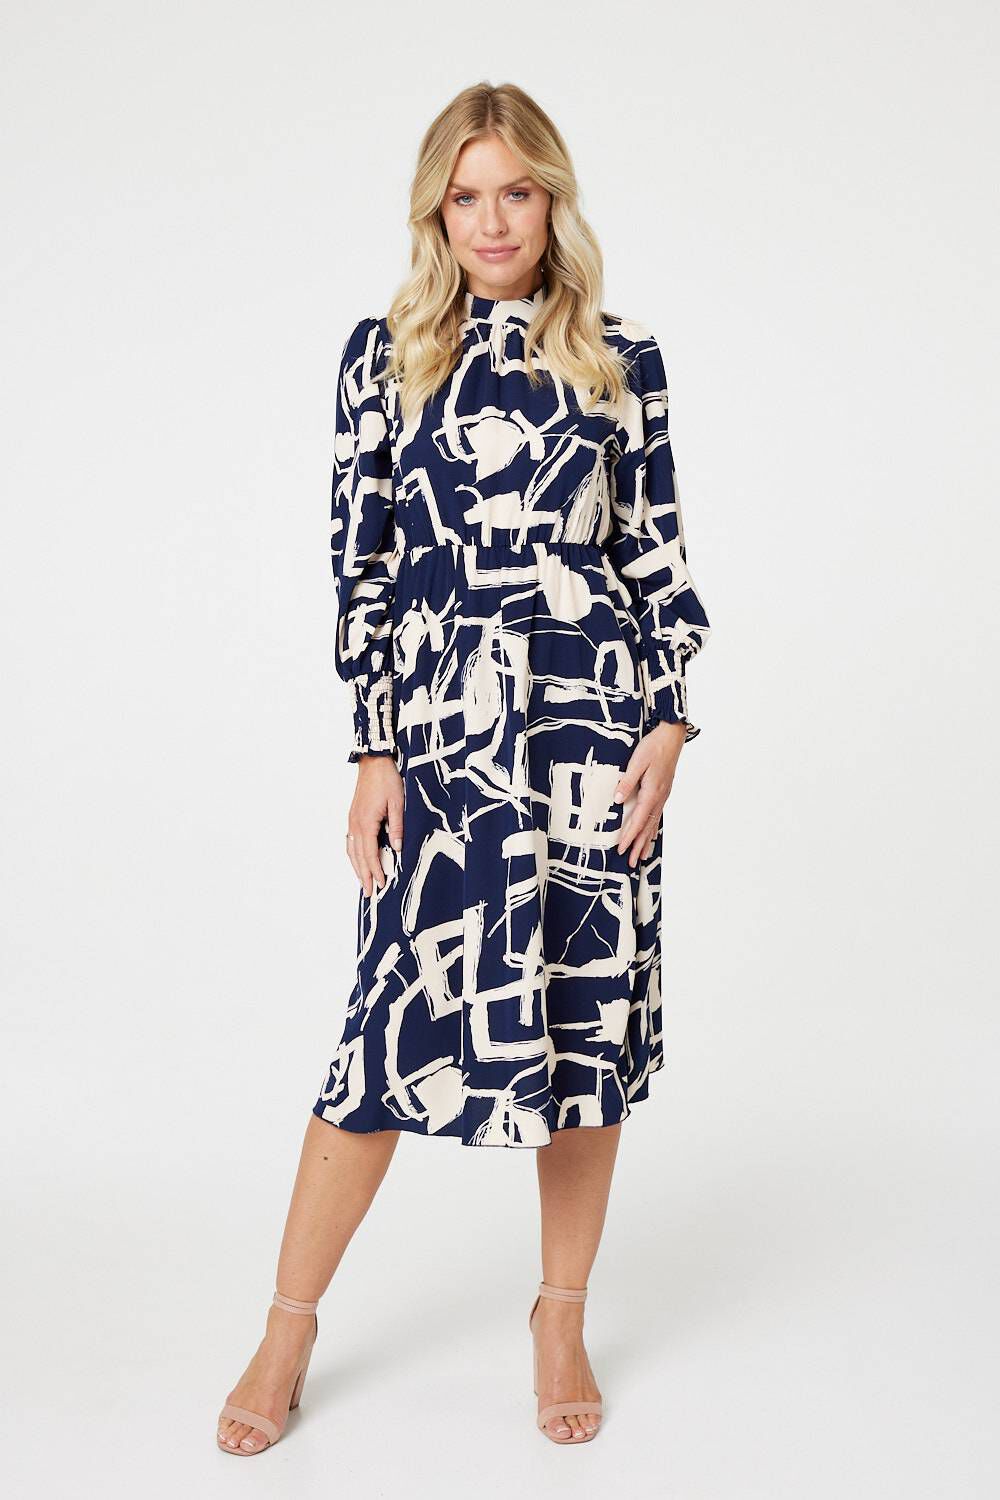 Izabel London Women’s Navy Blue and Cream Printed High Necked Midi Dress, Size: L